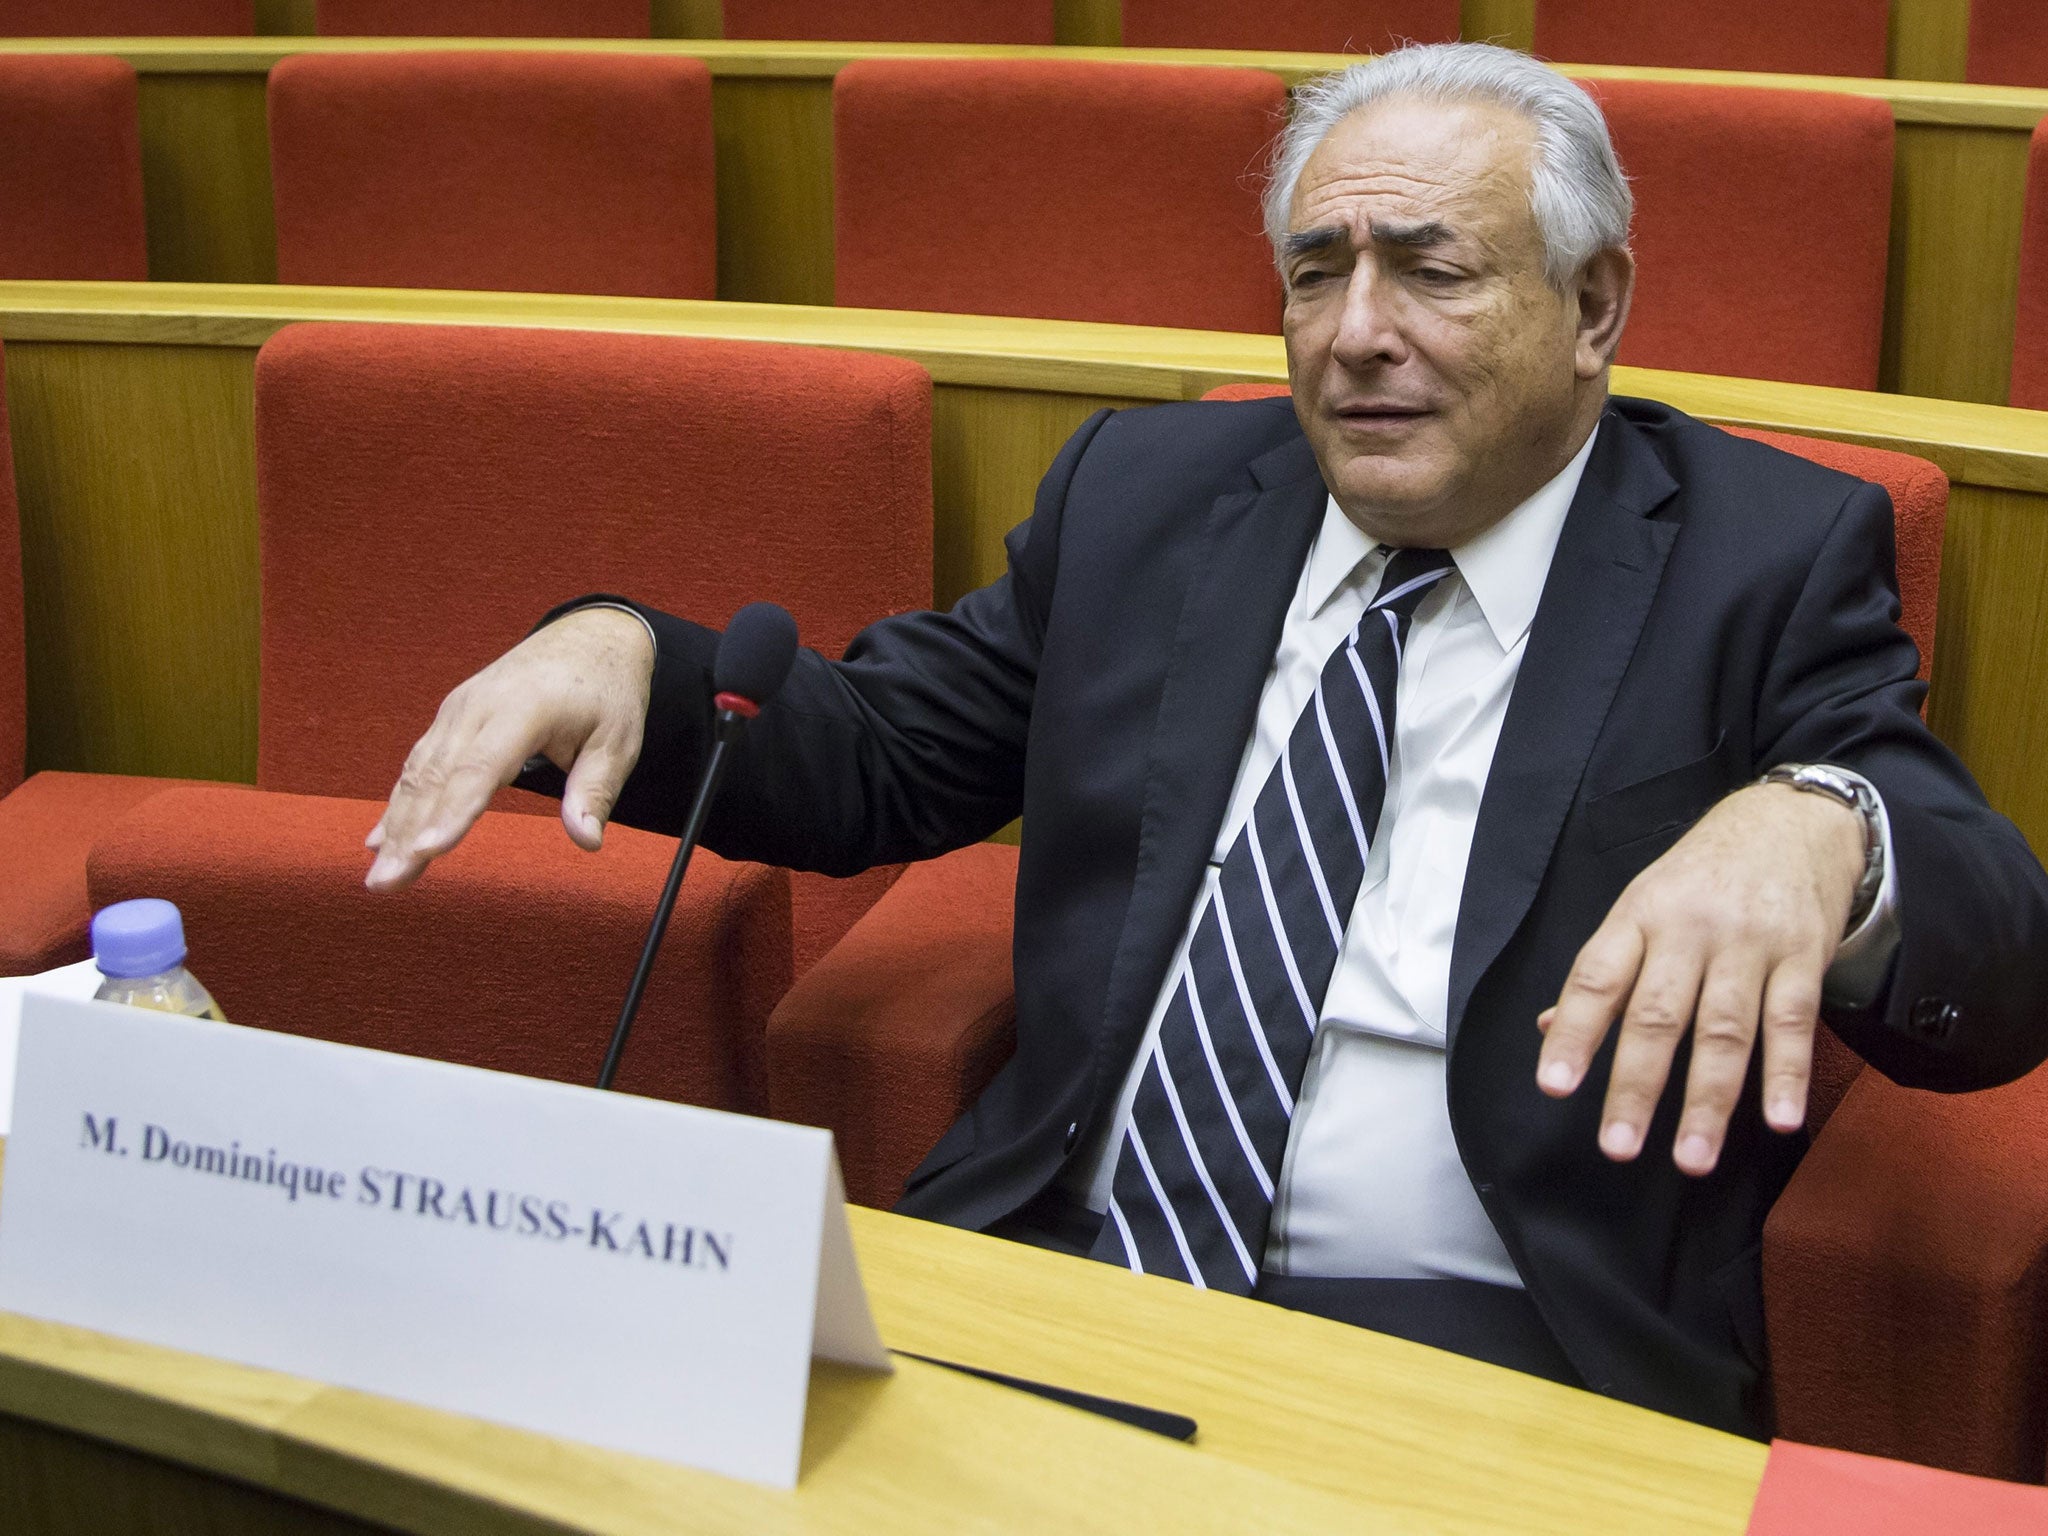 Disgraced French politician Dominique Strauss-Kahn